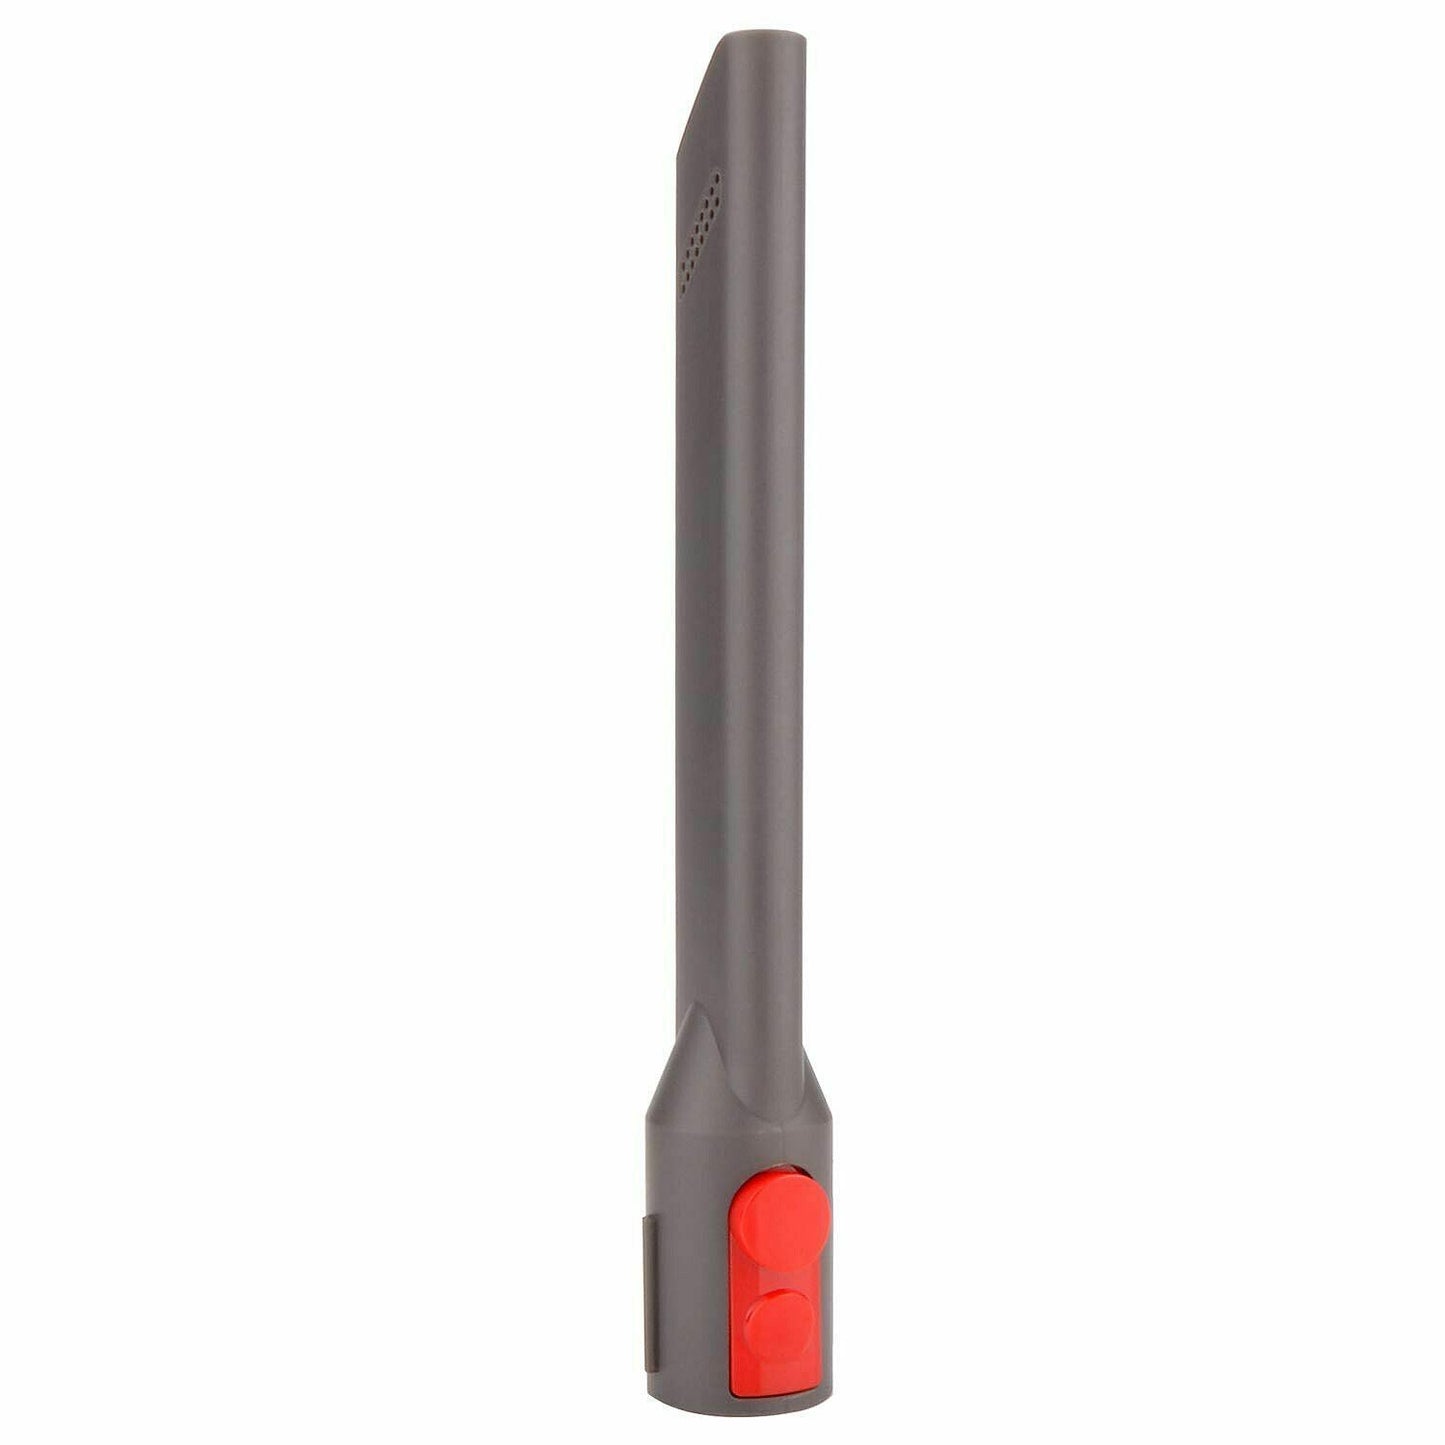 4x NEW OEM Dyson V7 V8 V10 V11 OUTSIZE V15 Cleaning Brush Tool Kit Attachments